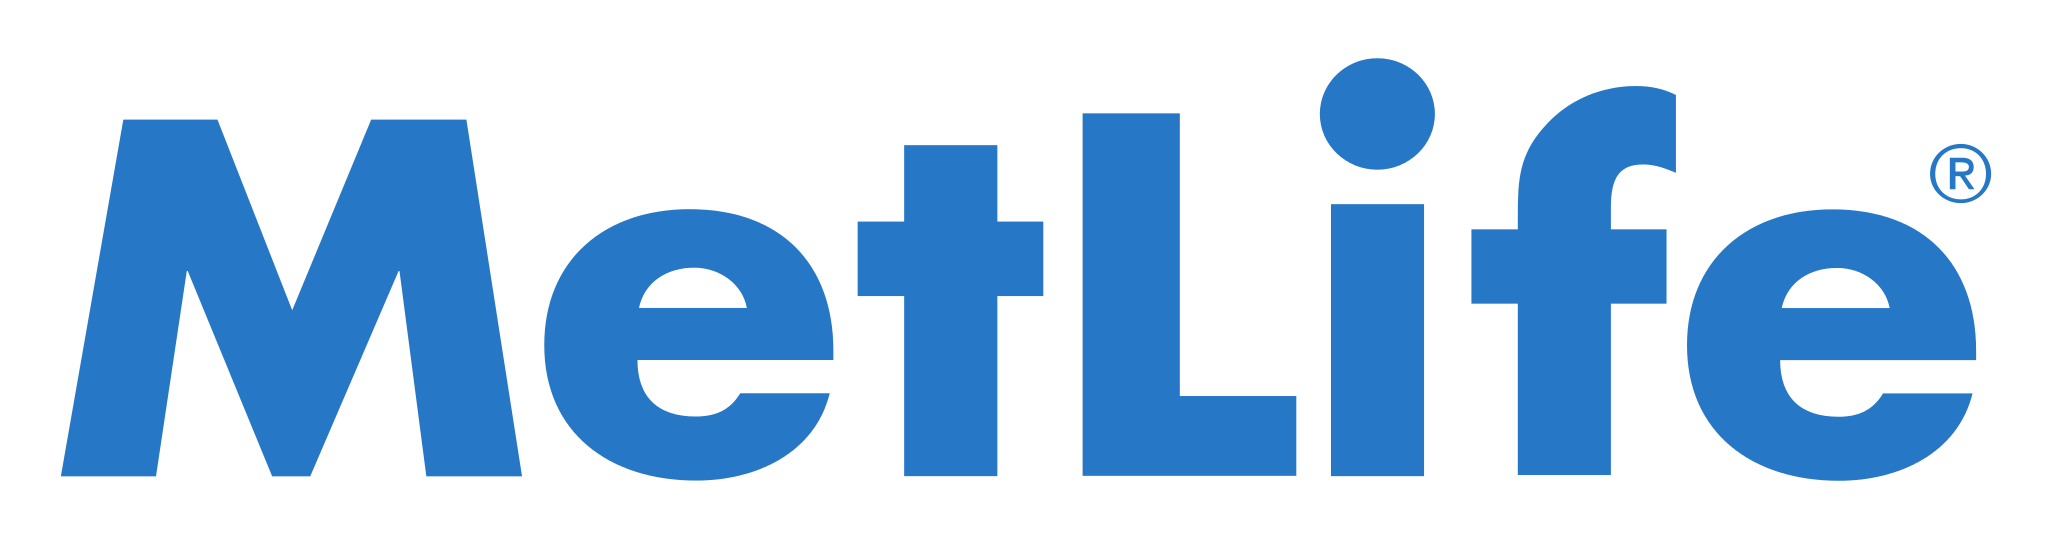 Download MetLife Logo PNG Image for Free